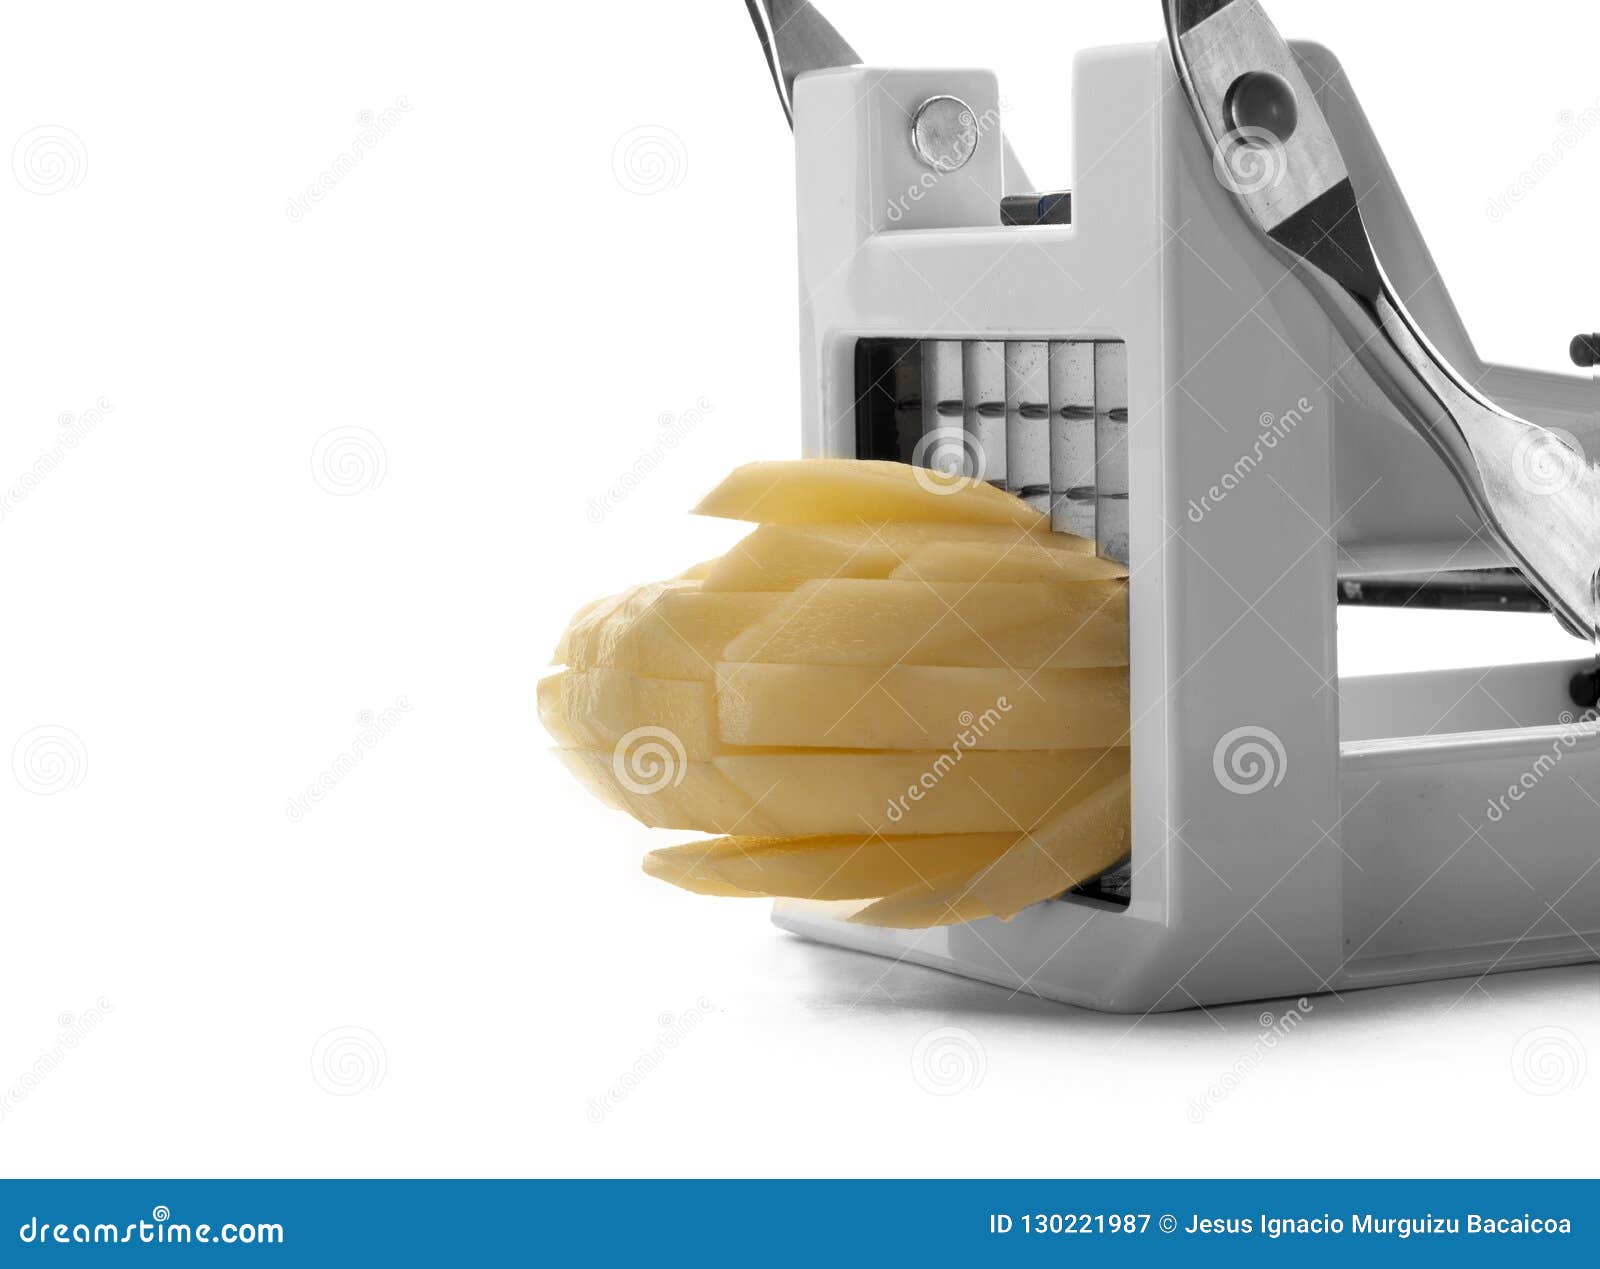 white manual machine for cutting potatoes